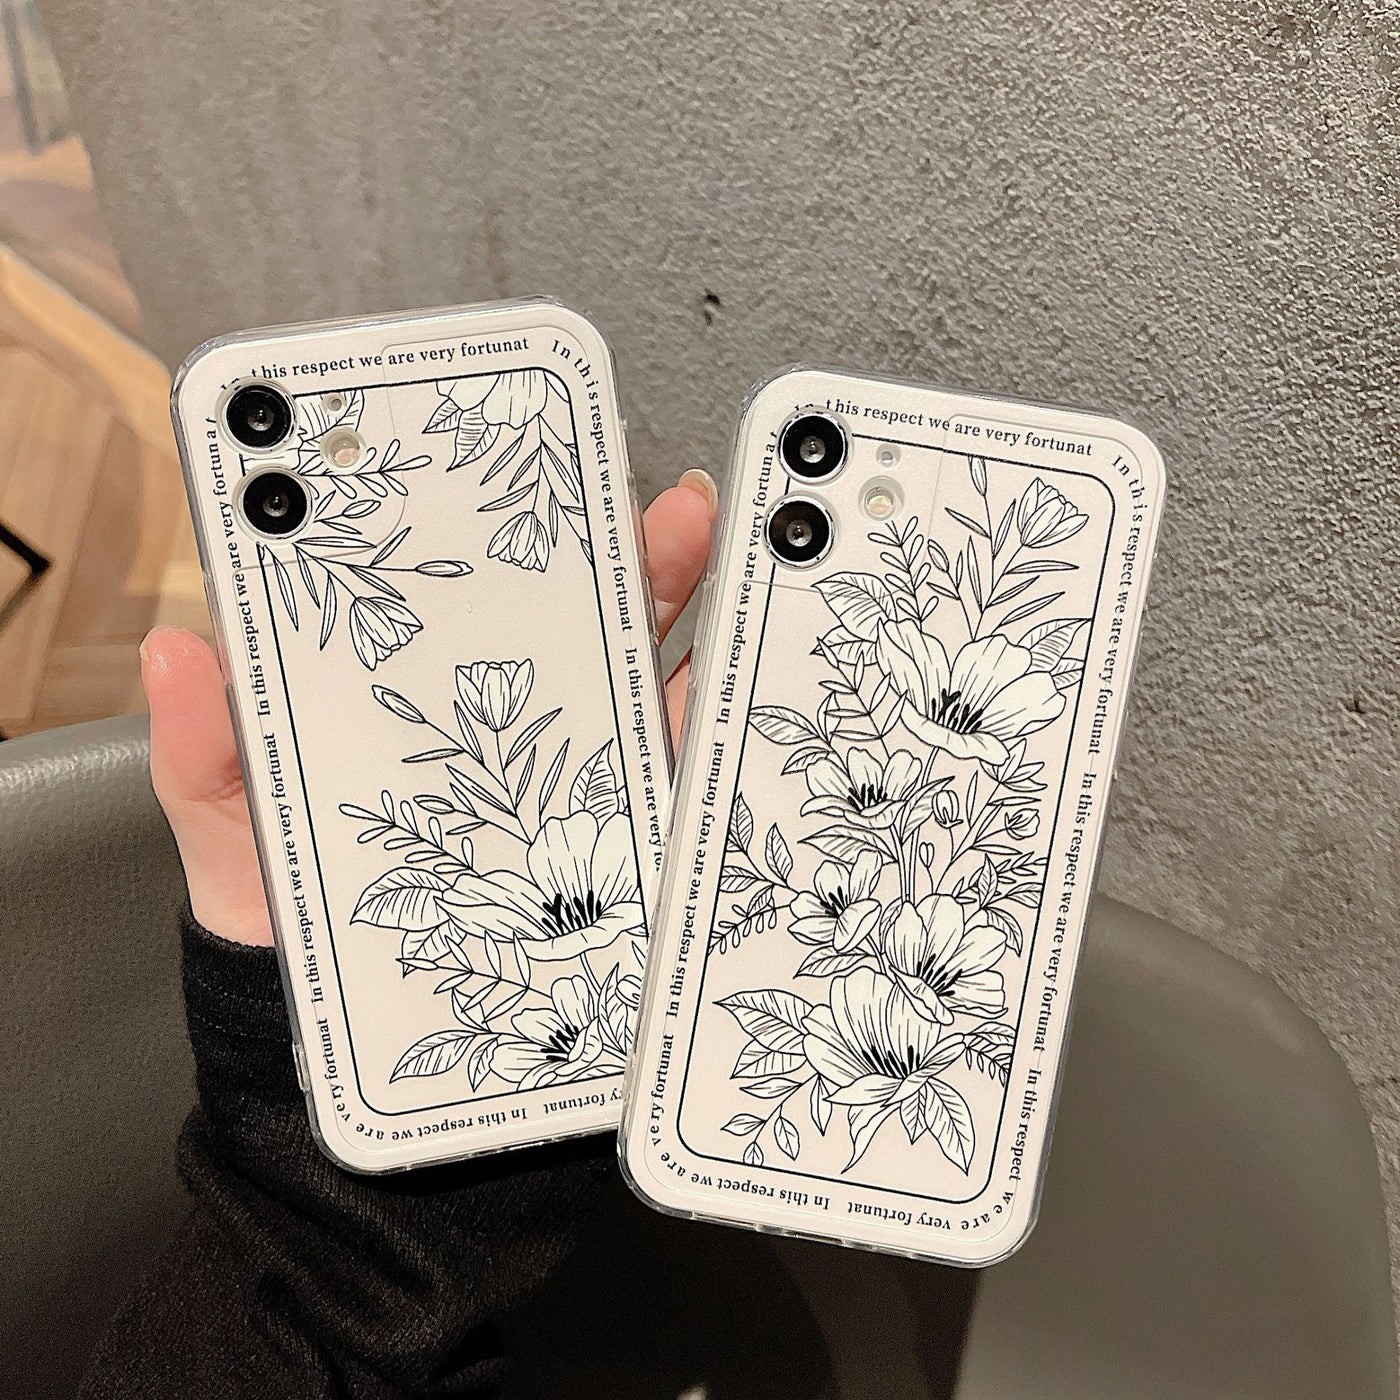 【iPhone Case】個性的な花柄A&BiPhoneケース